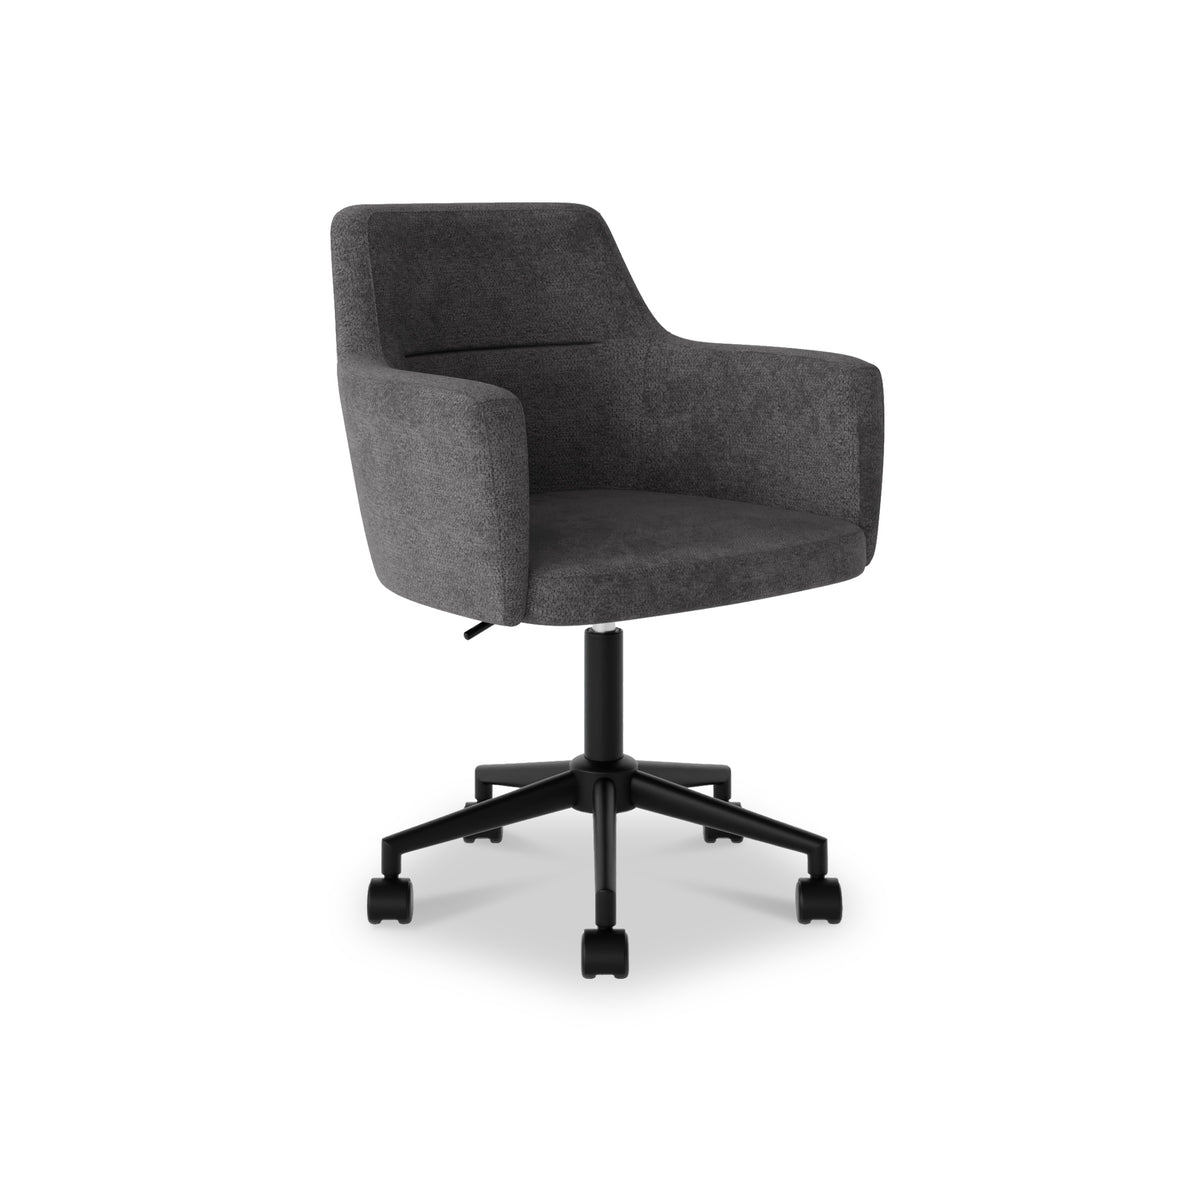 Elsa Dark Grey Height Adjustable Swivel Office Chair from Roseland Furniture